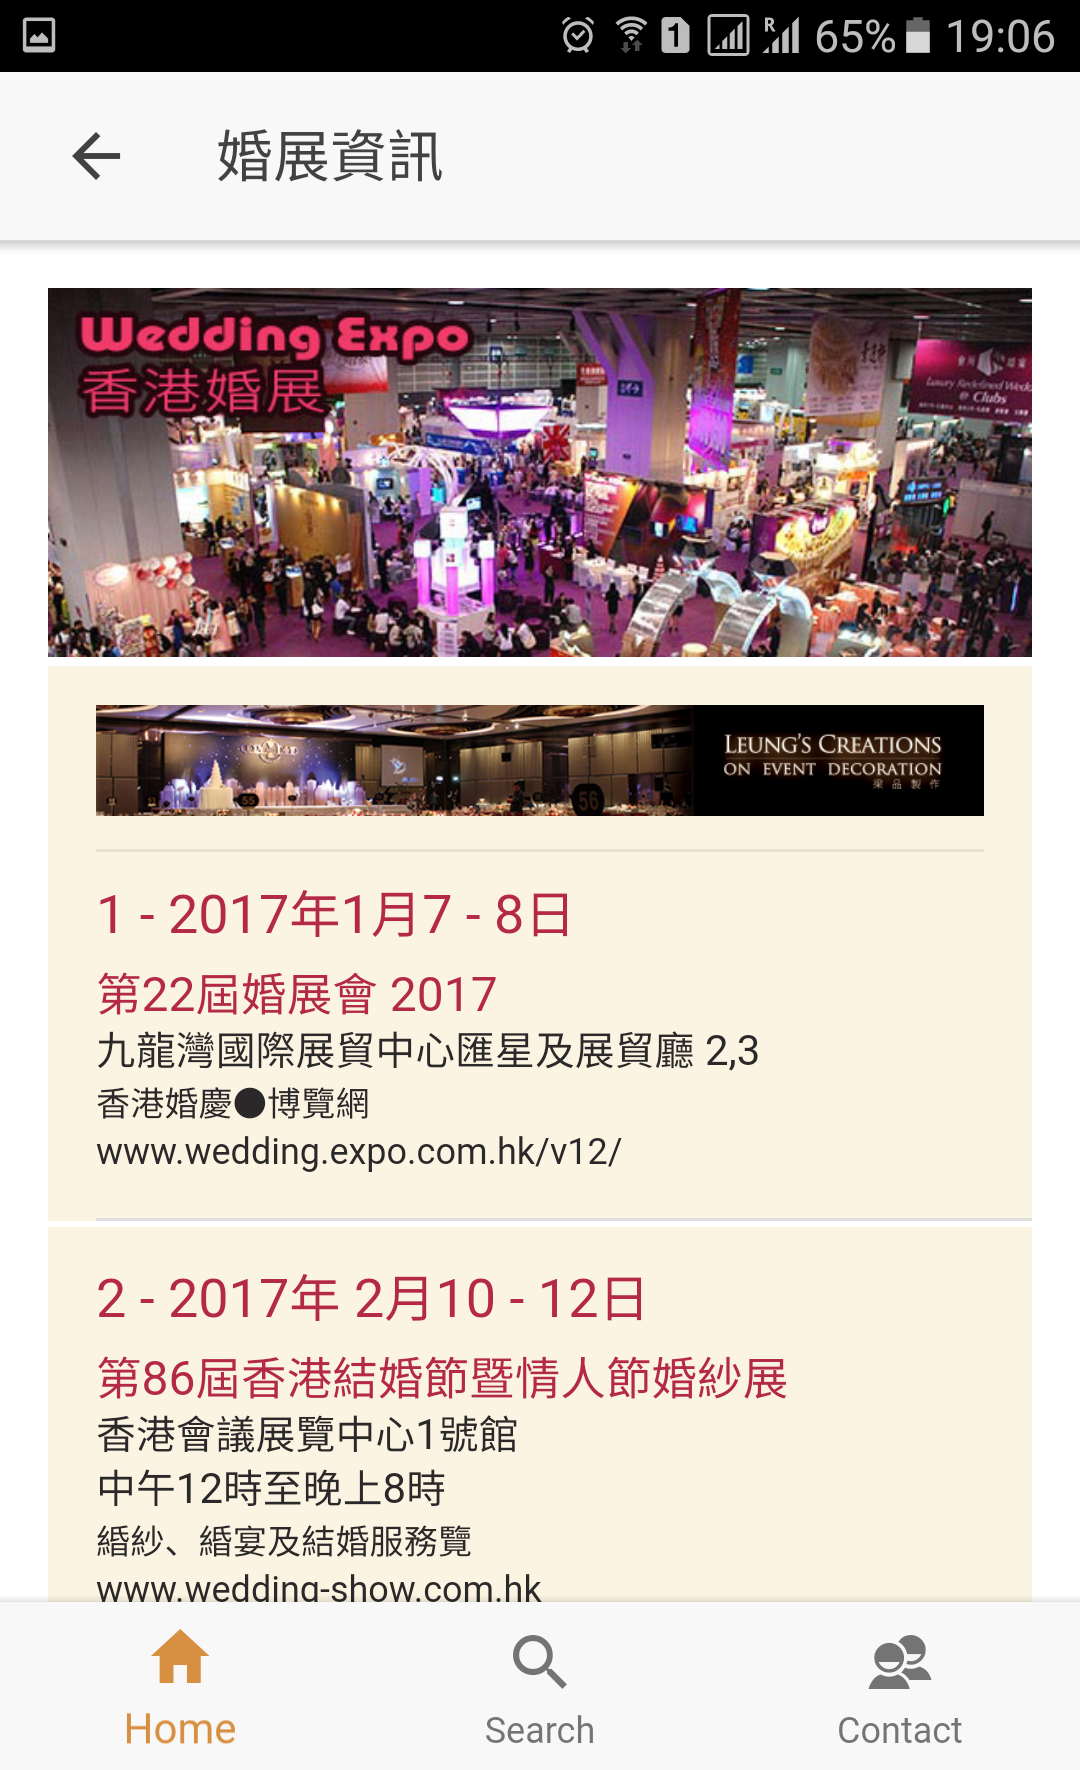 香港婚禮展覽資料 / Hong Kong Wedding Expo